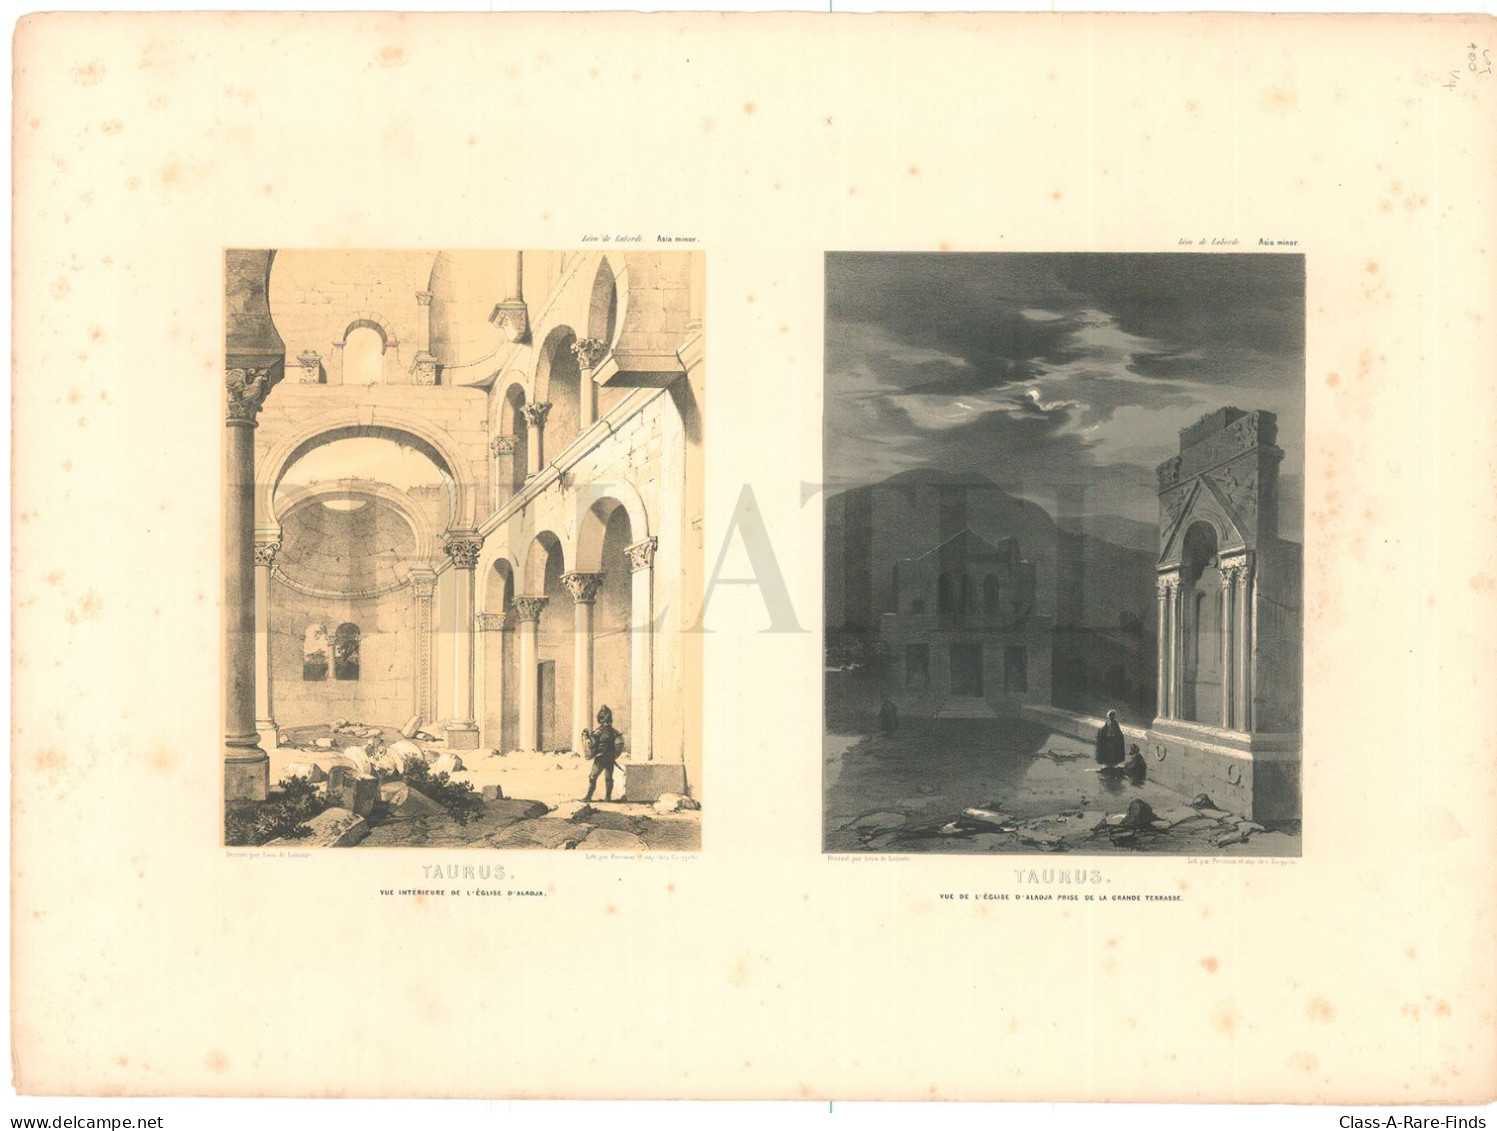 1838, LABORDE: "VOYAGE DE L'ASIE MINEURE" LITOGRAPH PLATE #69. ARCHAEOLOGY / TURKEY / ANATOLIA / SIVAS / ALACA - Arqueología